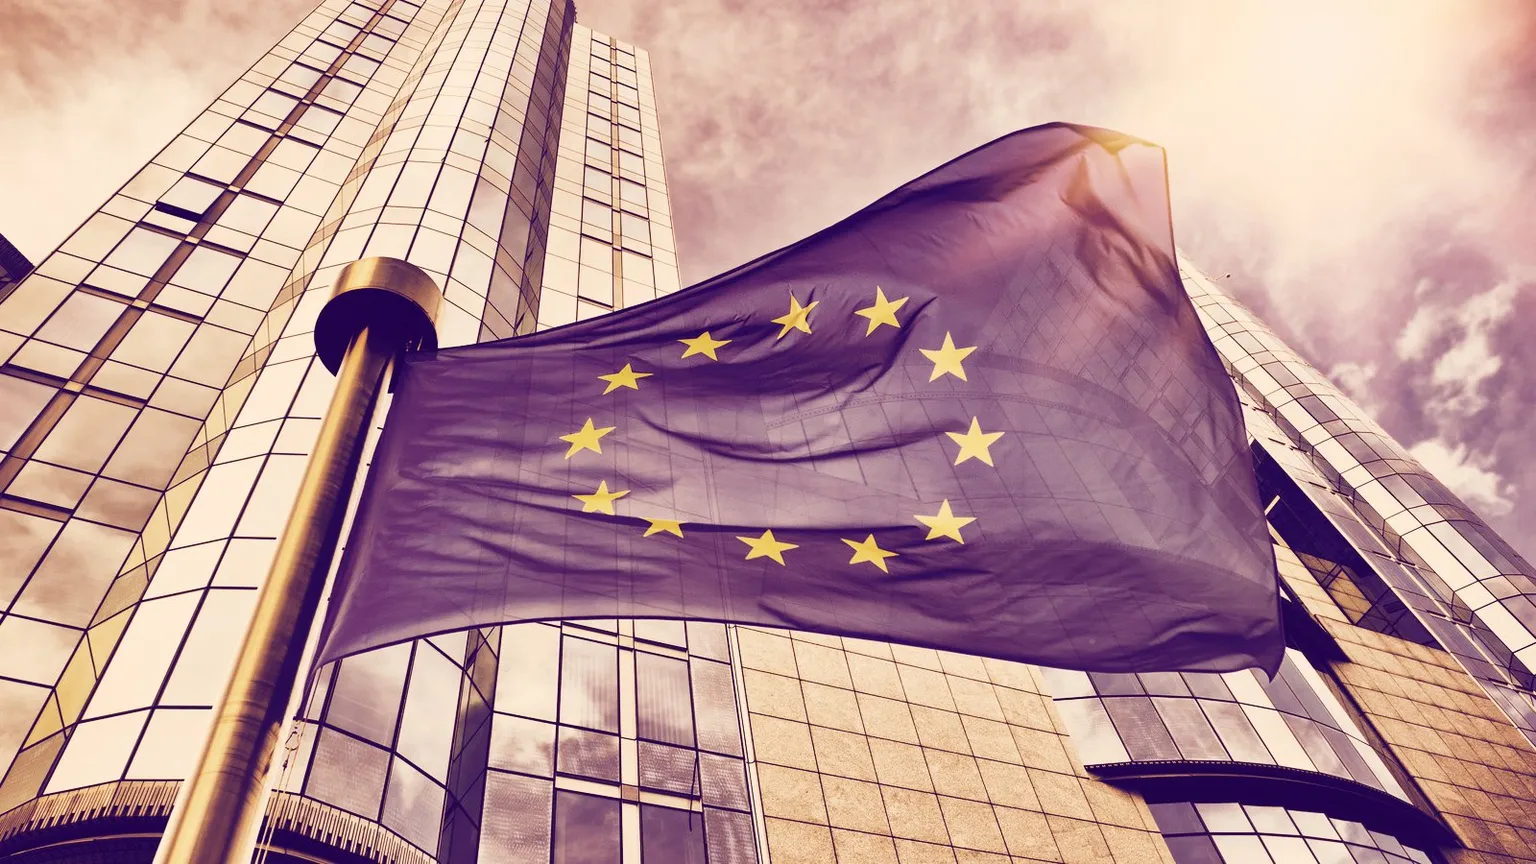 La bandera de la UE. Imagen: Shutterstock